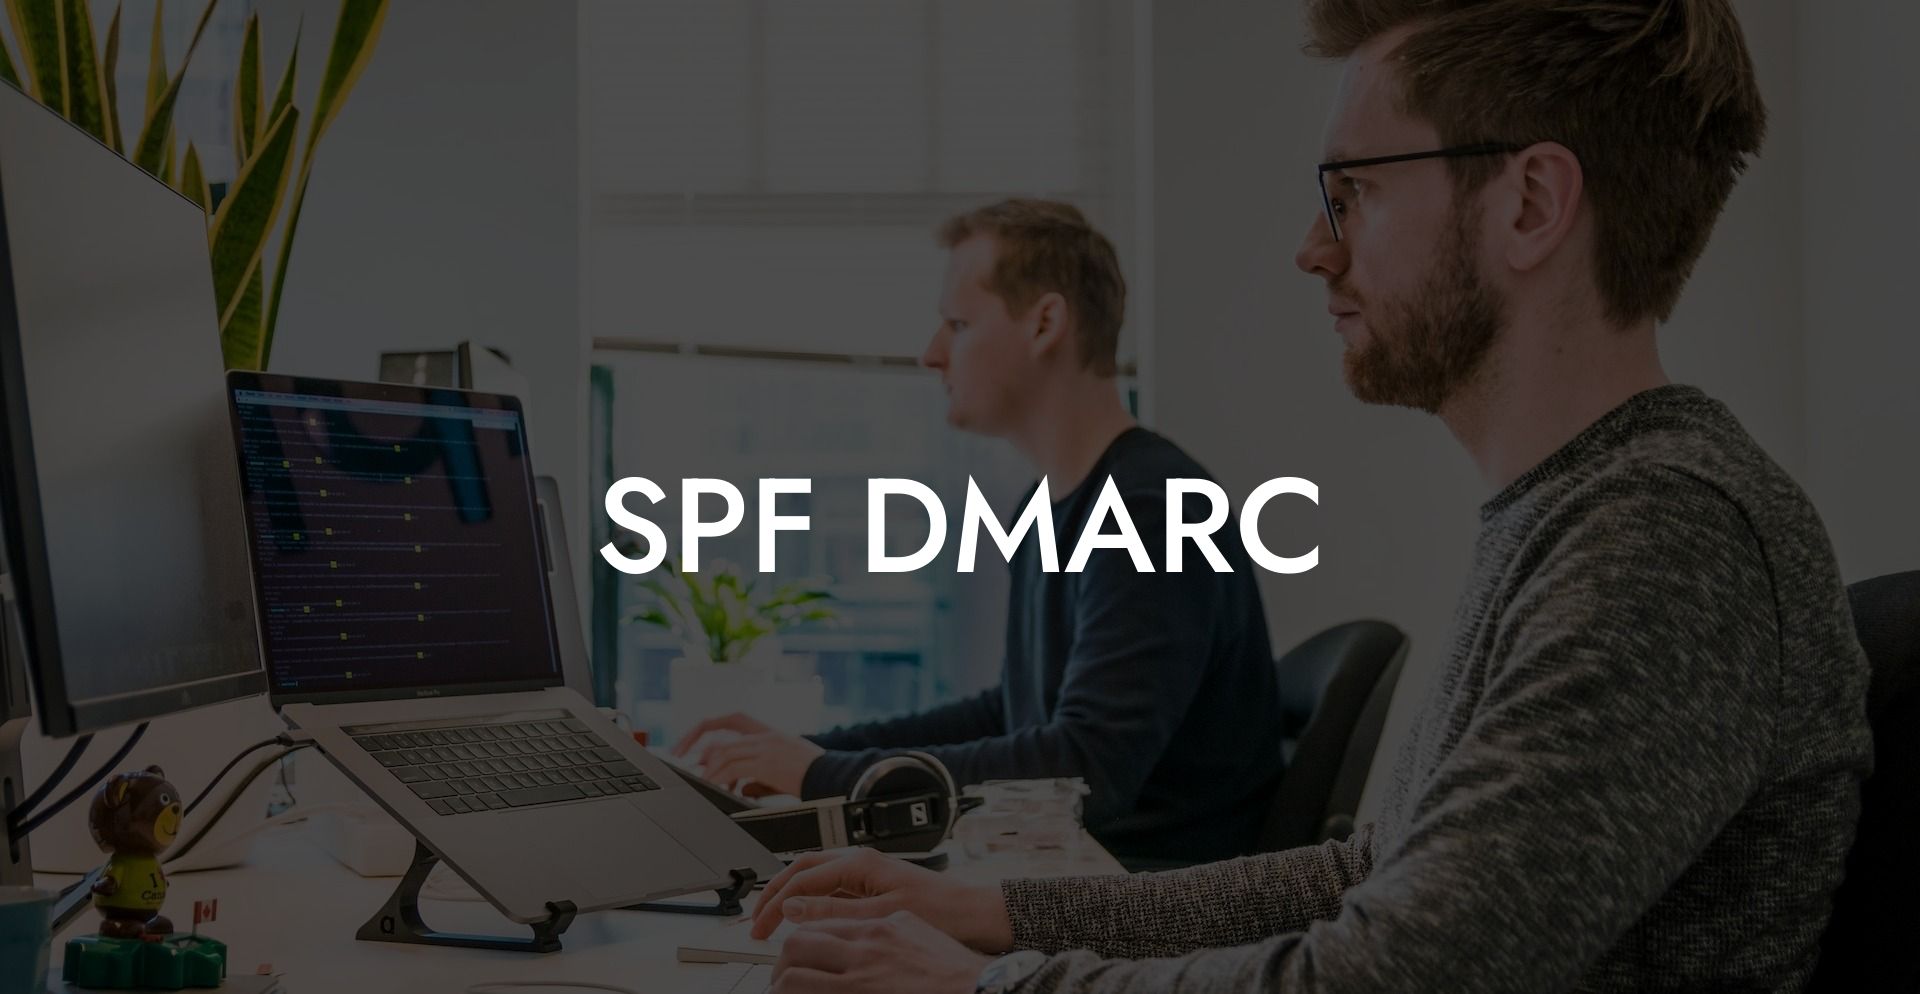 SPF DMARC